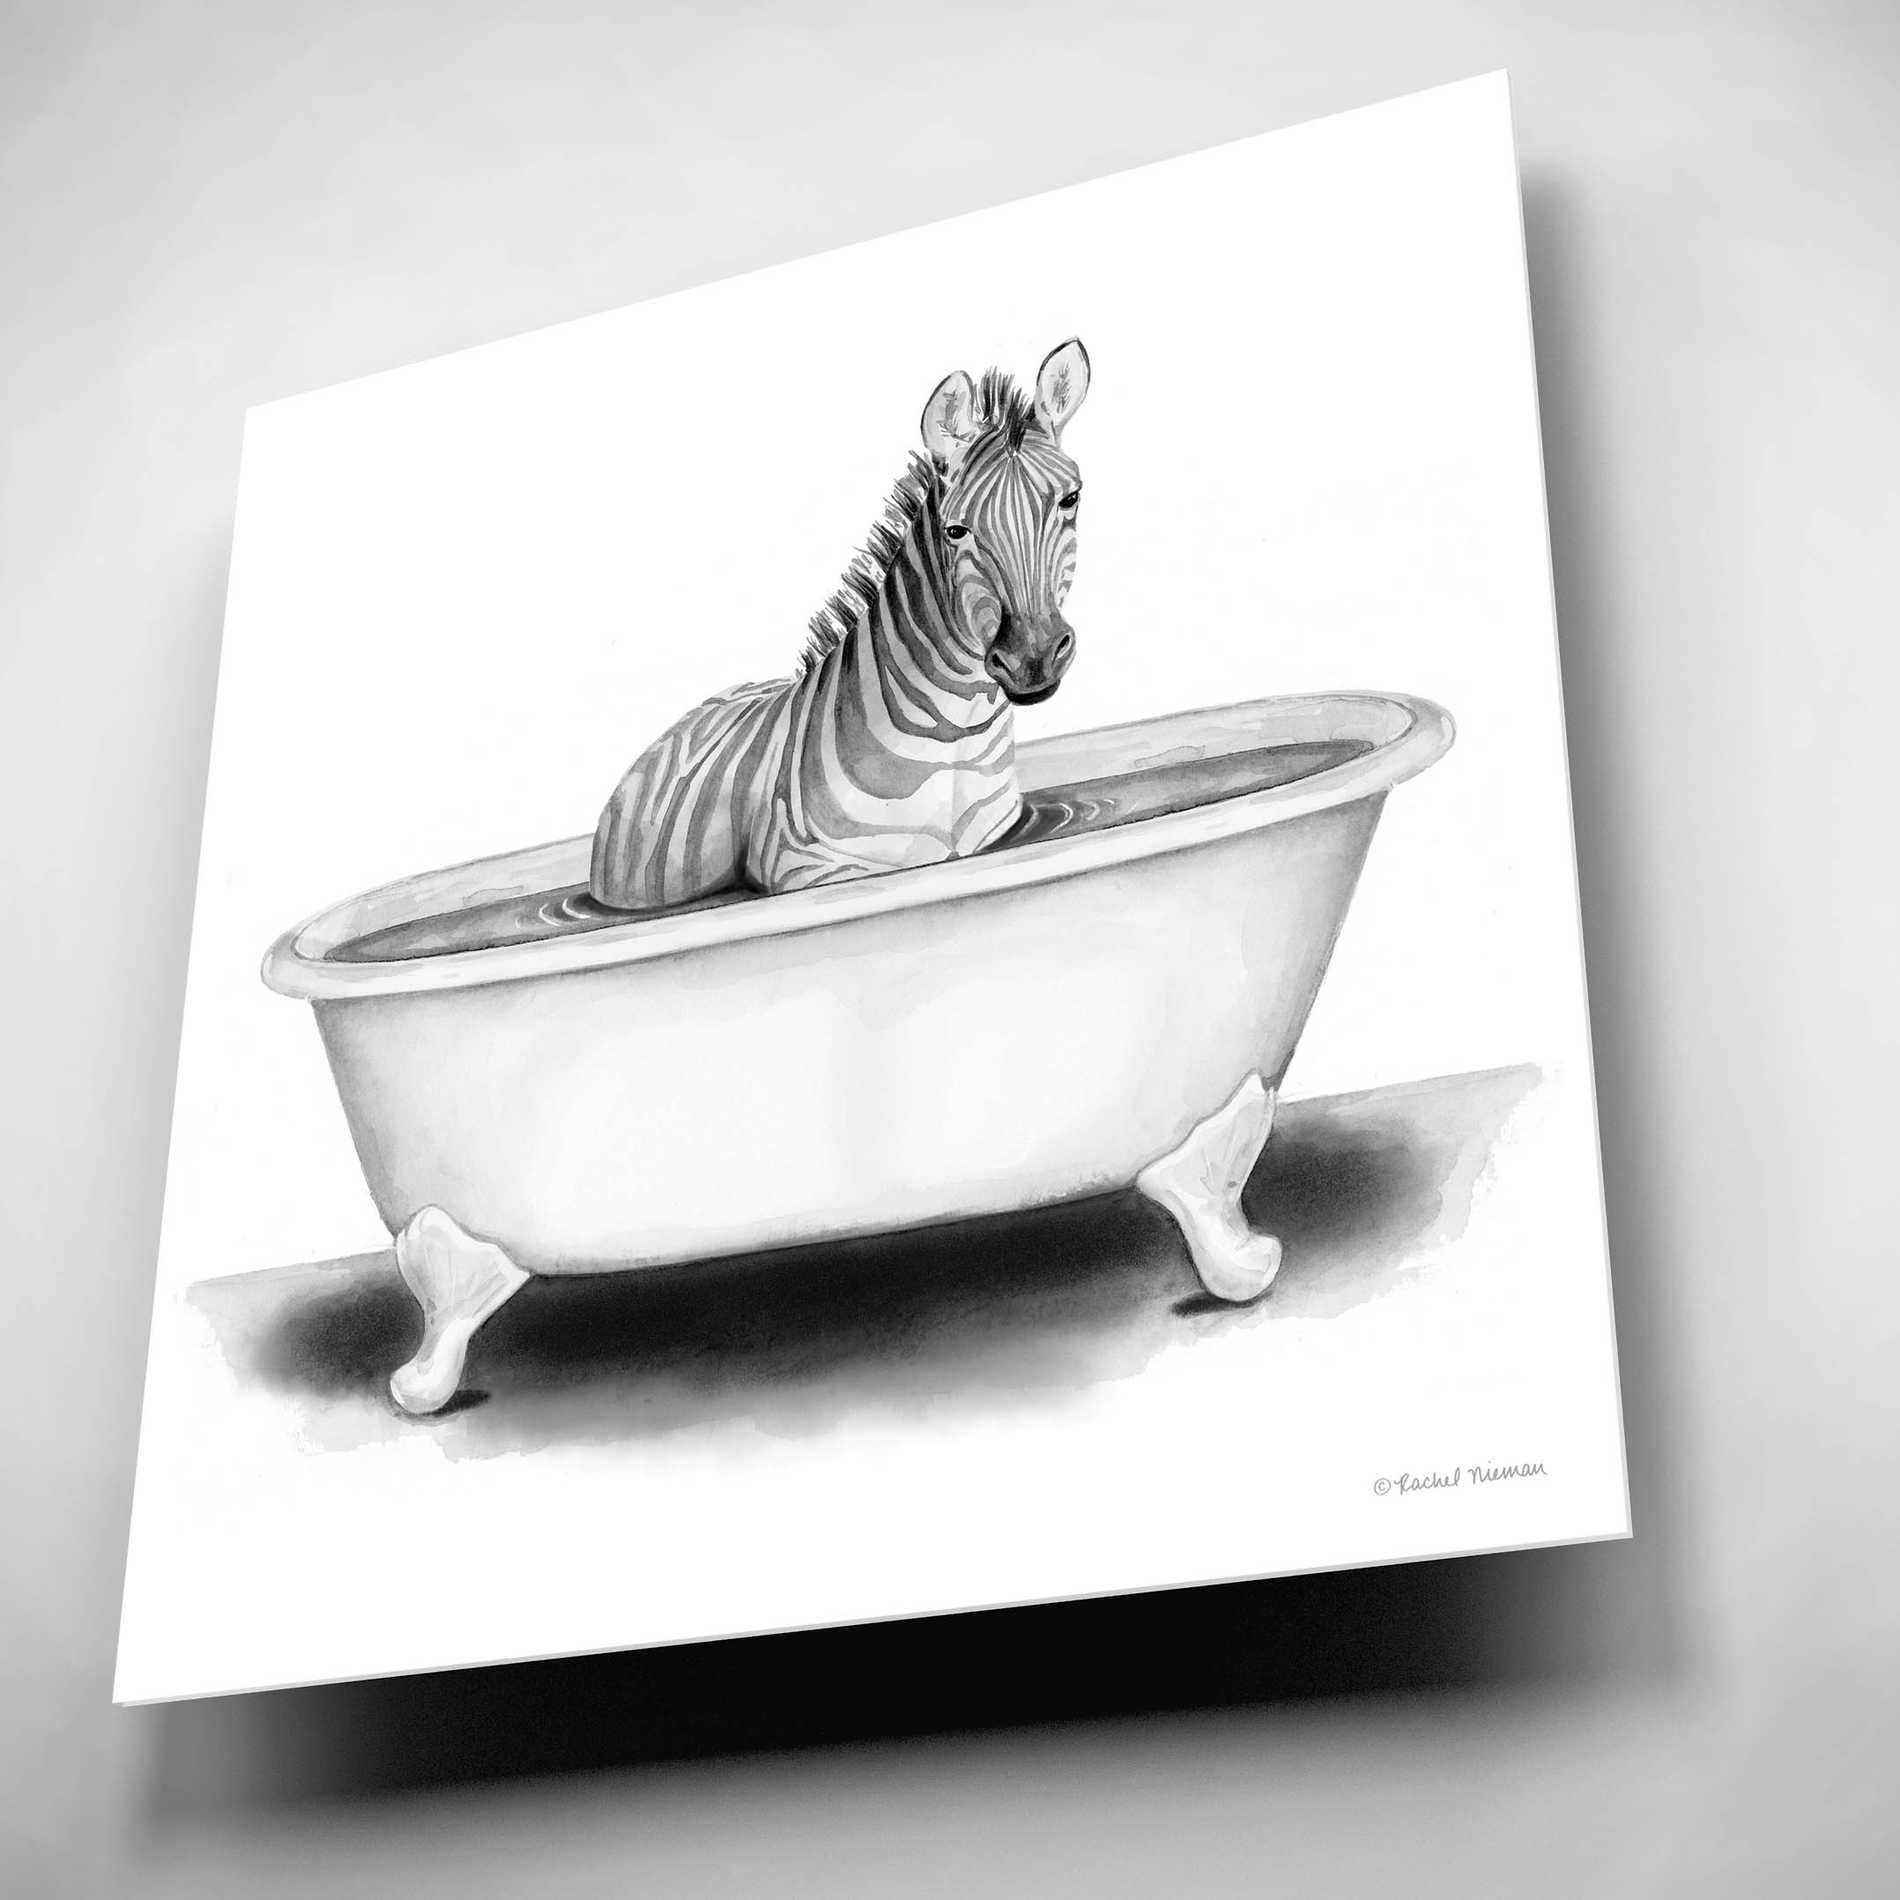 Epic Art 'Zebra in Tub' by Rachel Nieman, Acrylic Glass Wall Art,12x12